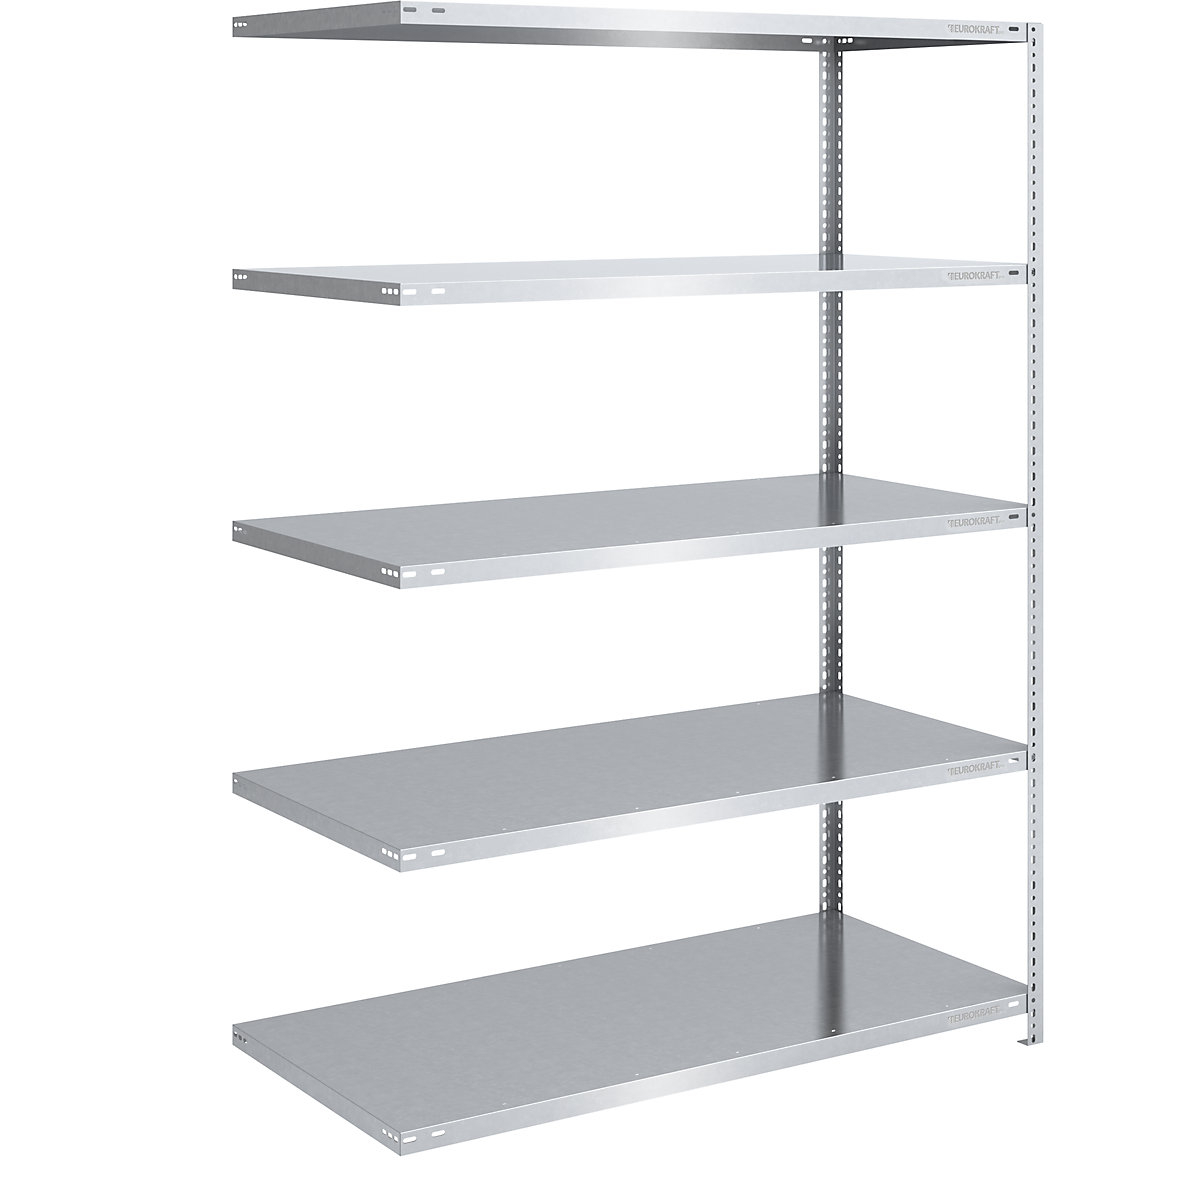 Bolt-together storage shelving, zinc plated, medium duty – eurokraft pro, shelf unit height 2000 mm, shelf width 1300 mm, depth 800 mm, extension shelf unit-7